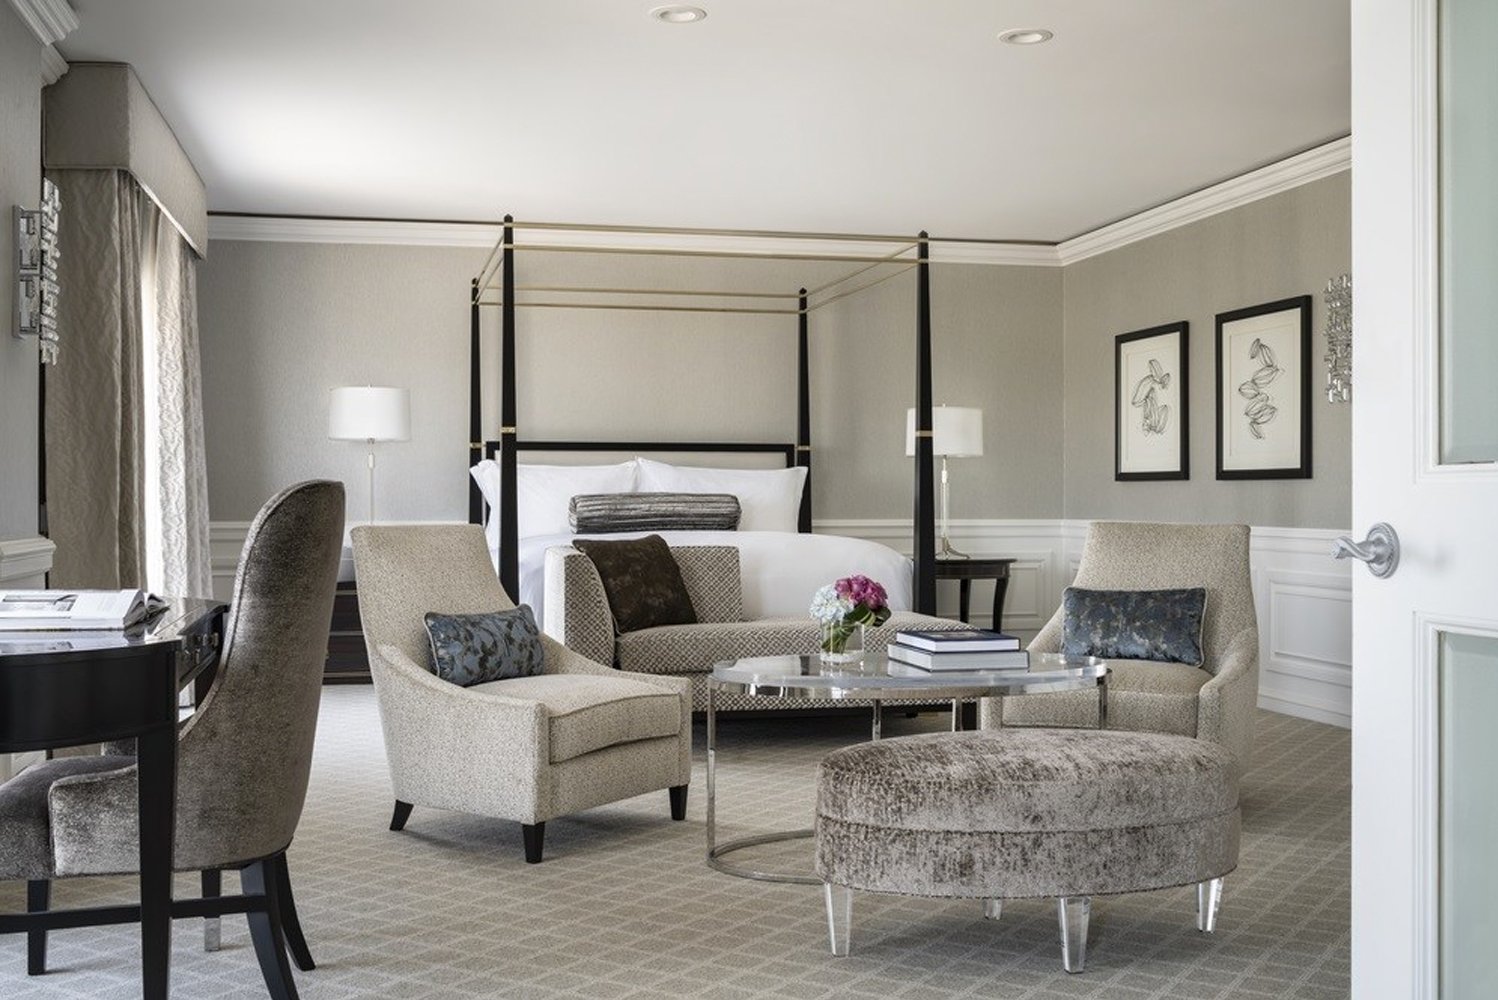 The Ritz-Carlton St Louis renovates Club Lounge select accommodations